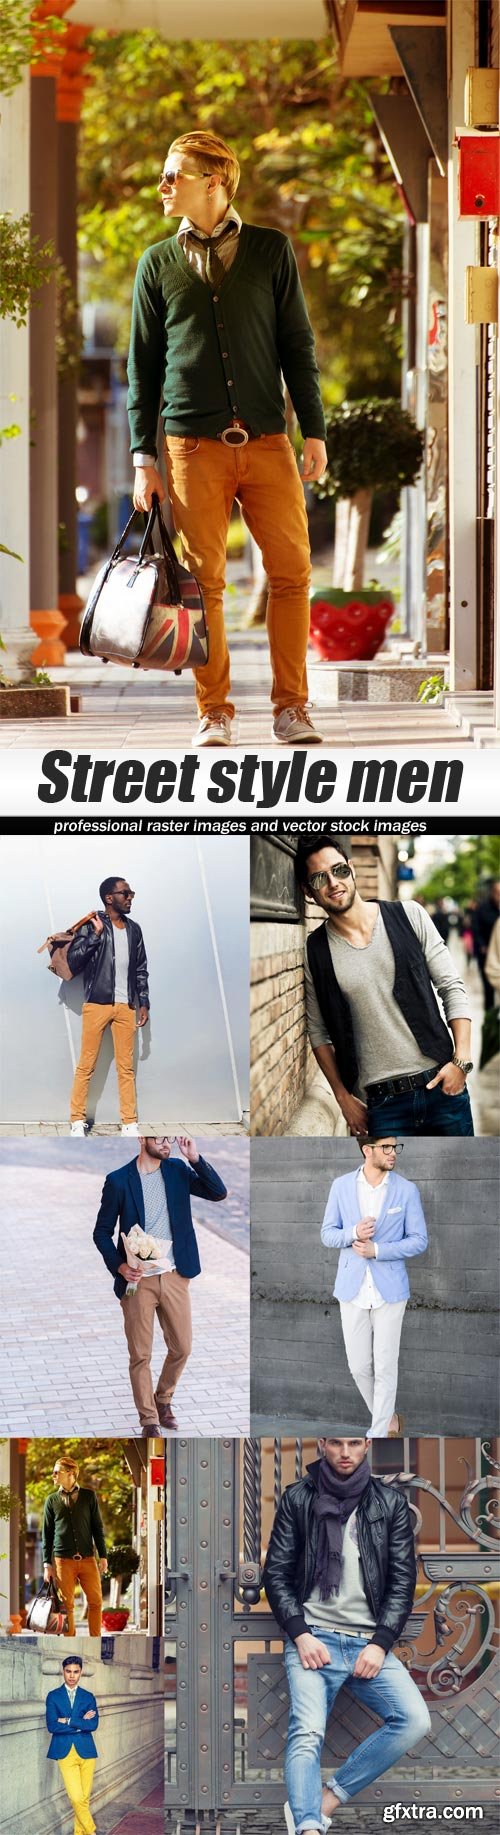 Street style men